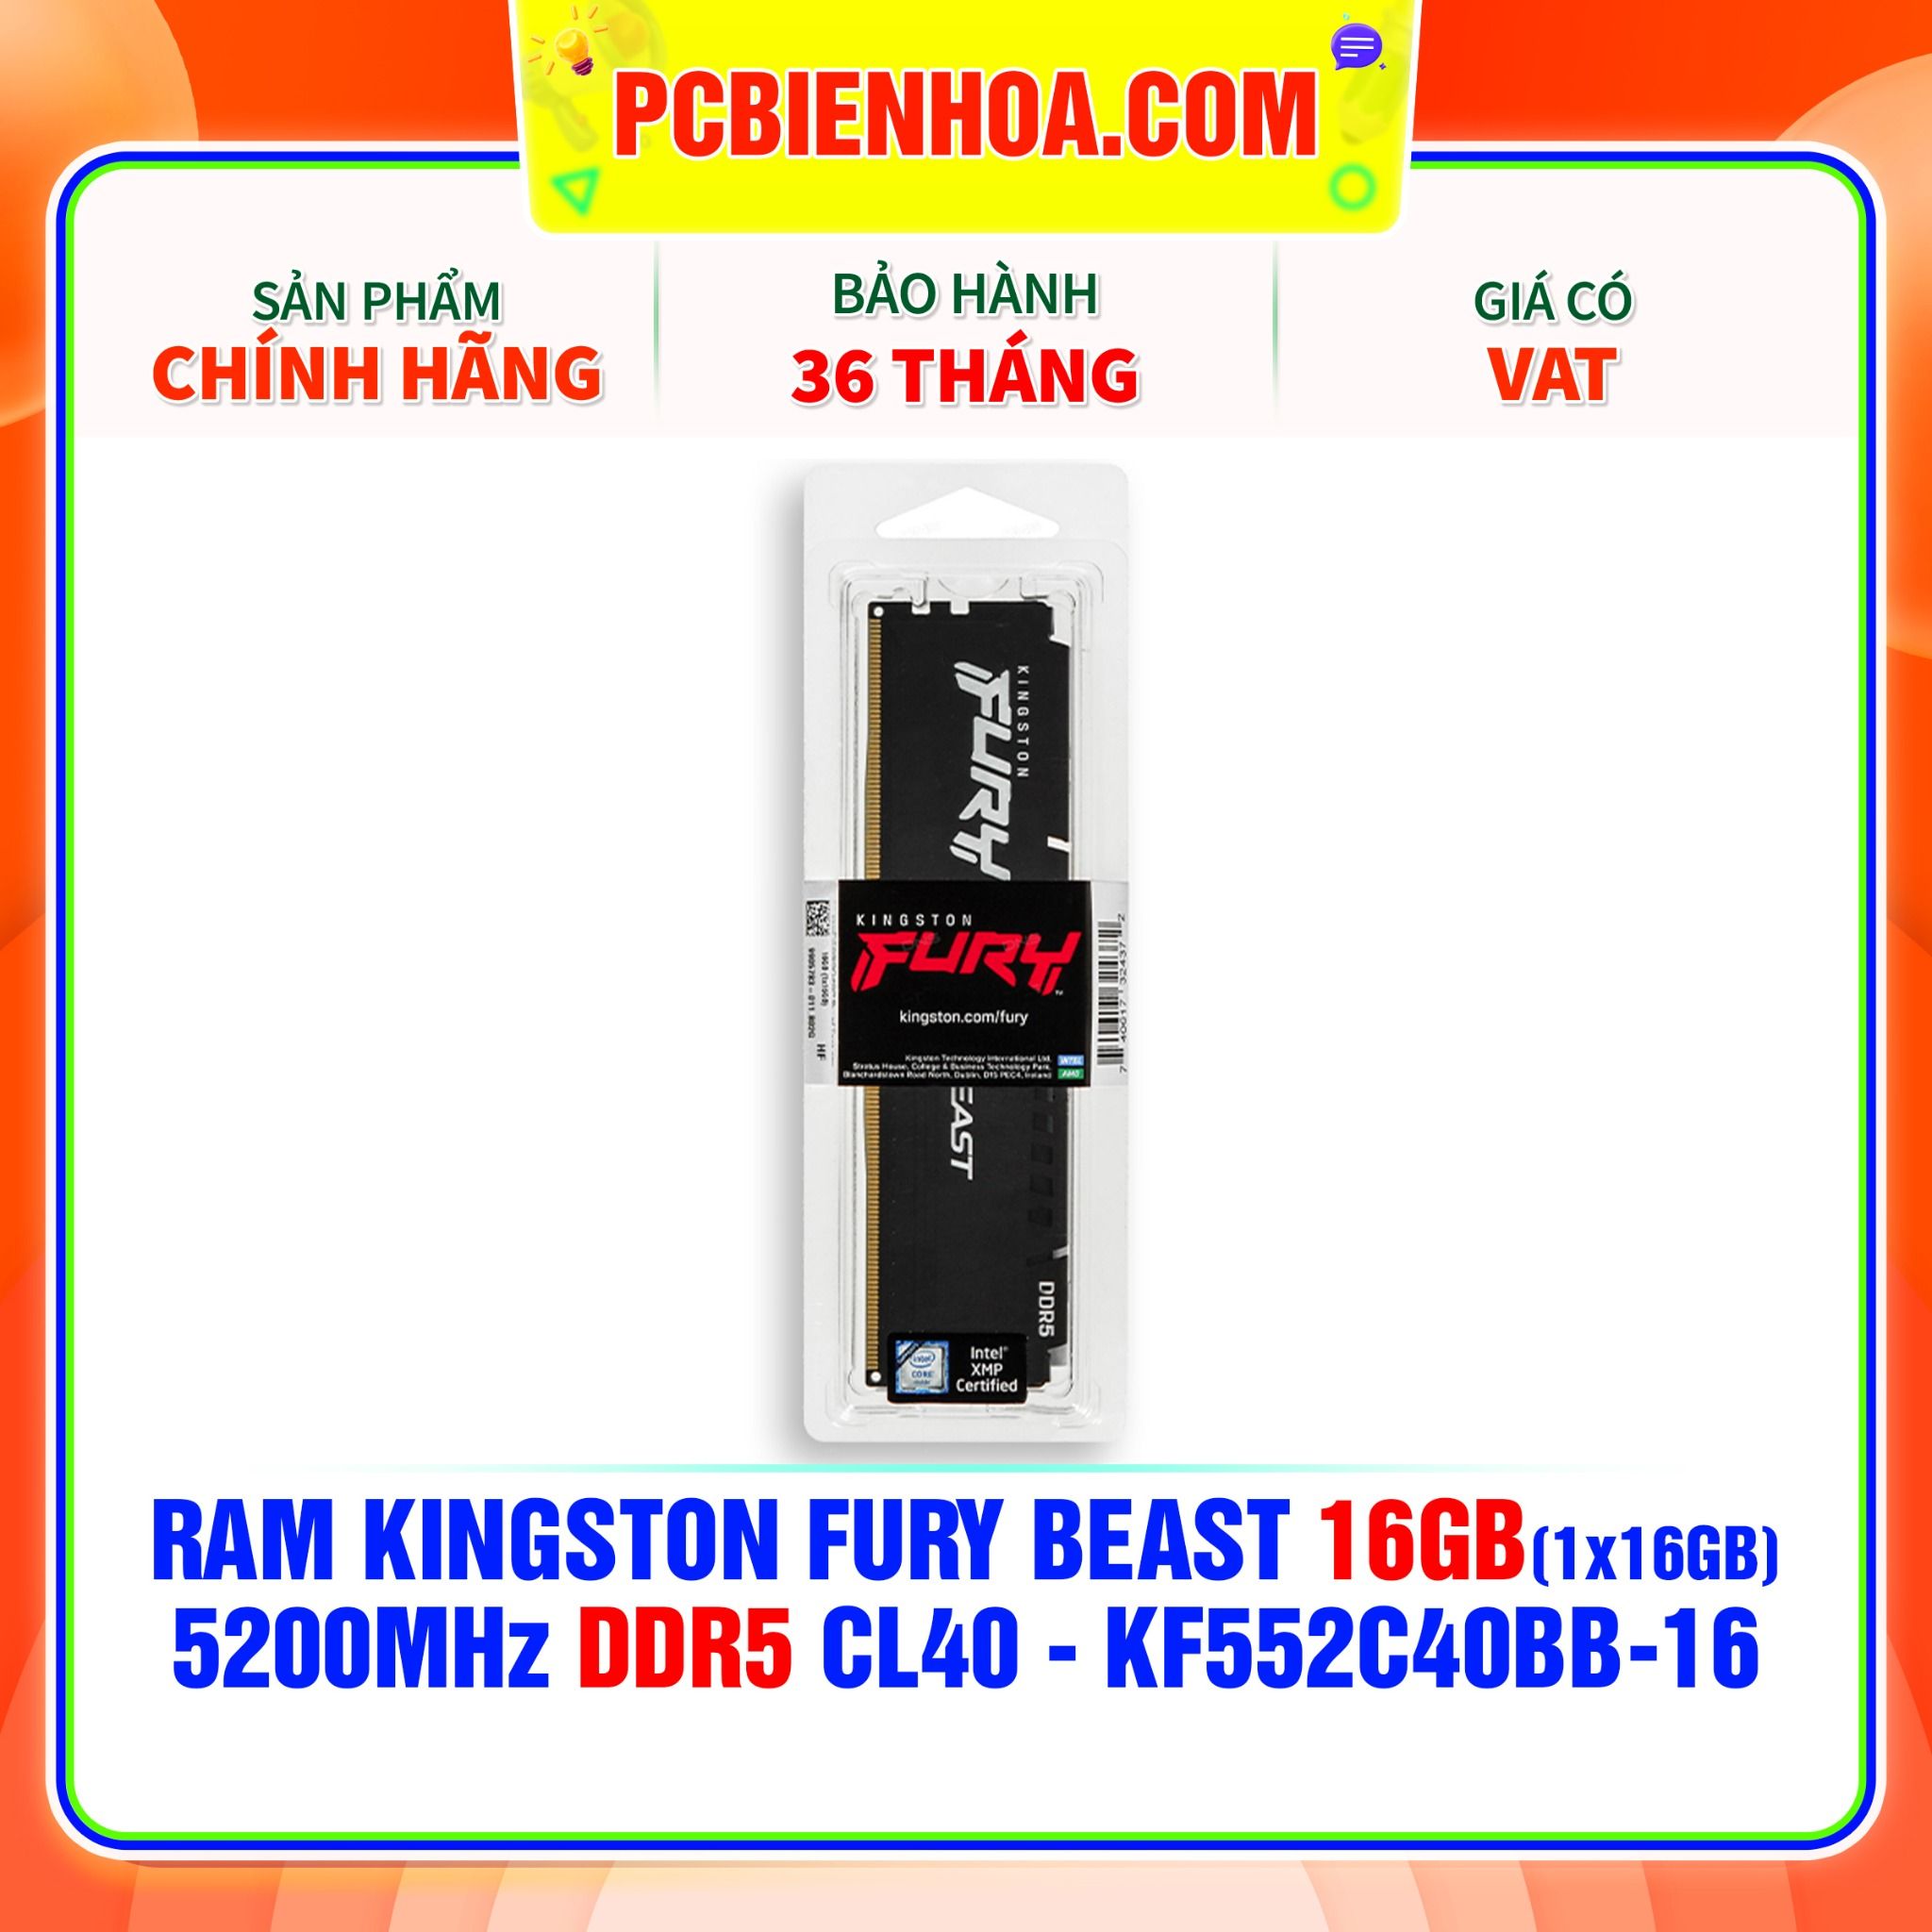  RAM KINGSTON FURY BEAST 16GB (1x16GB) 5200MHz DDR5 CL40 - KF552C40BB-16 